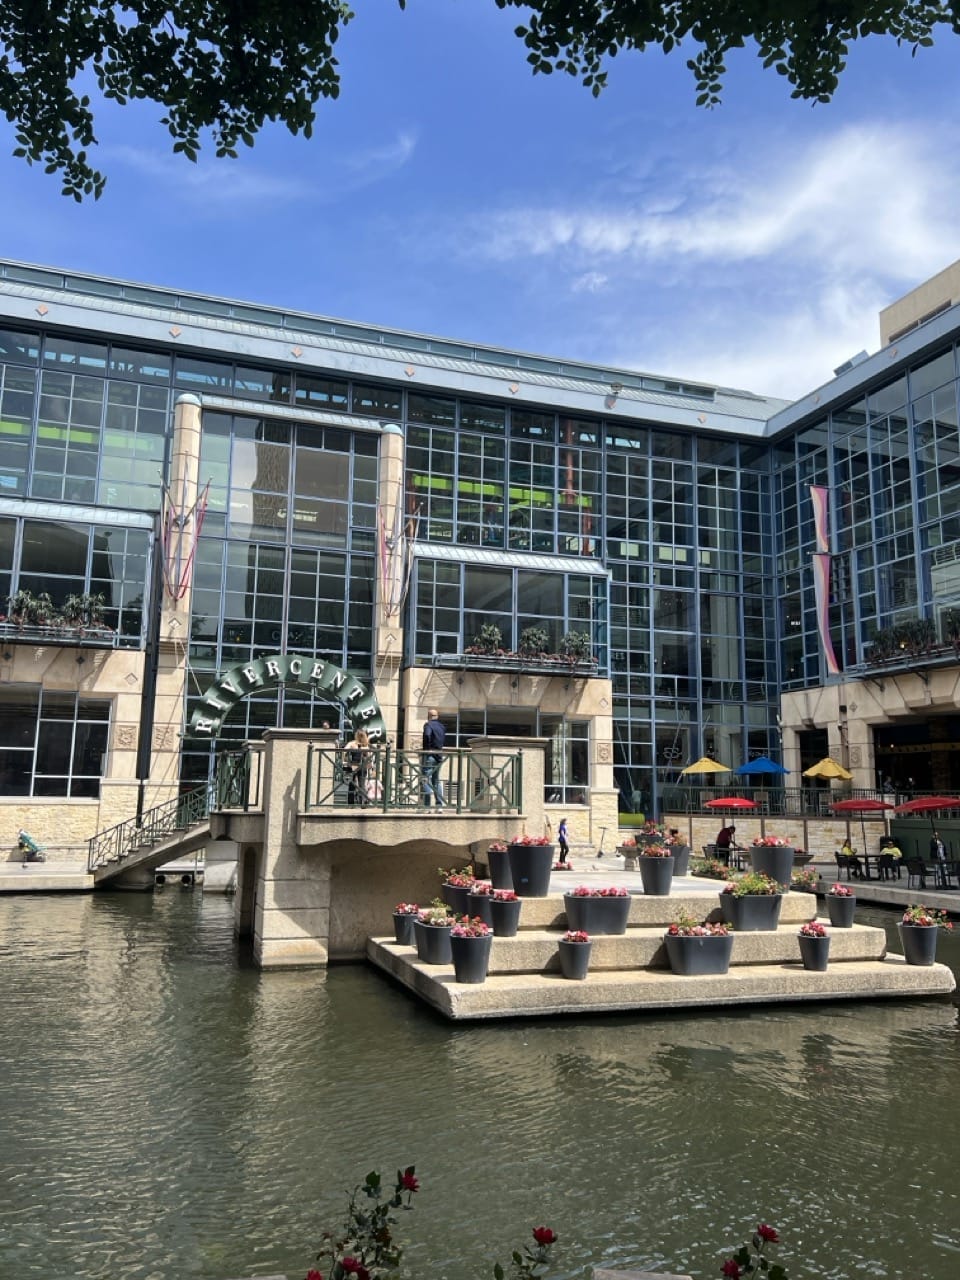 San Antonio Rivercenter Mall